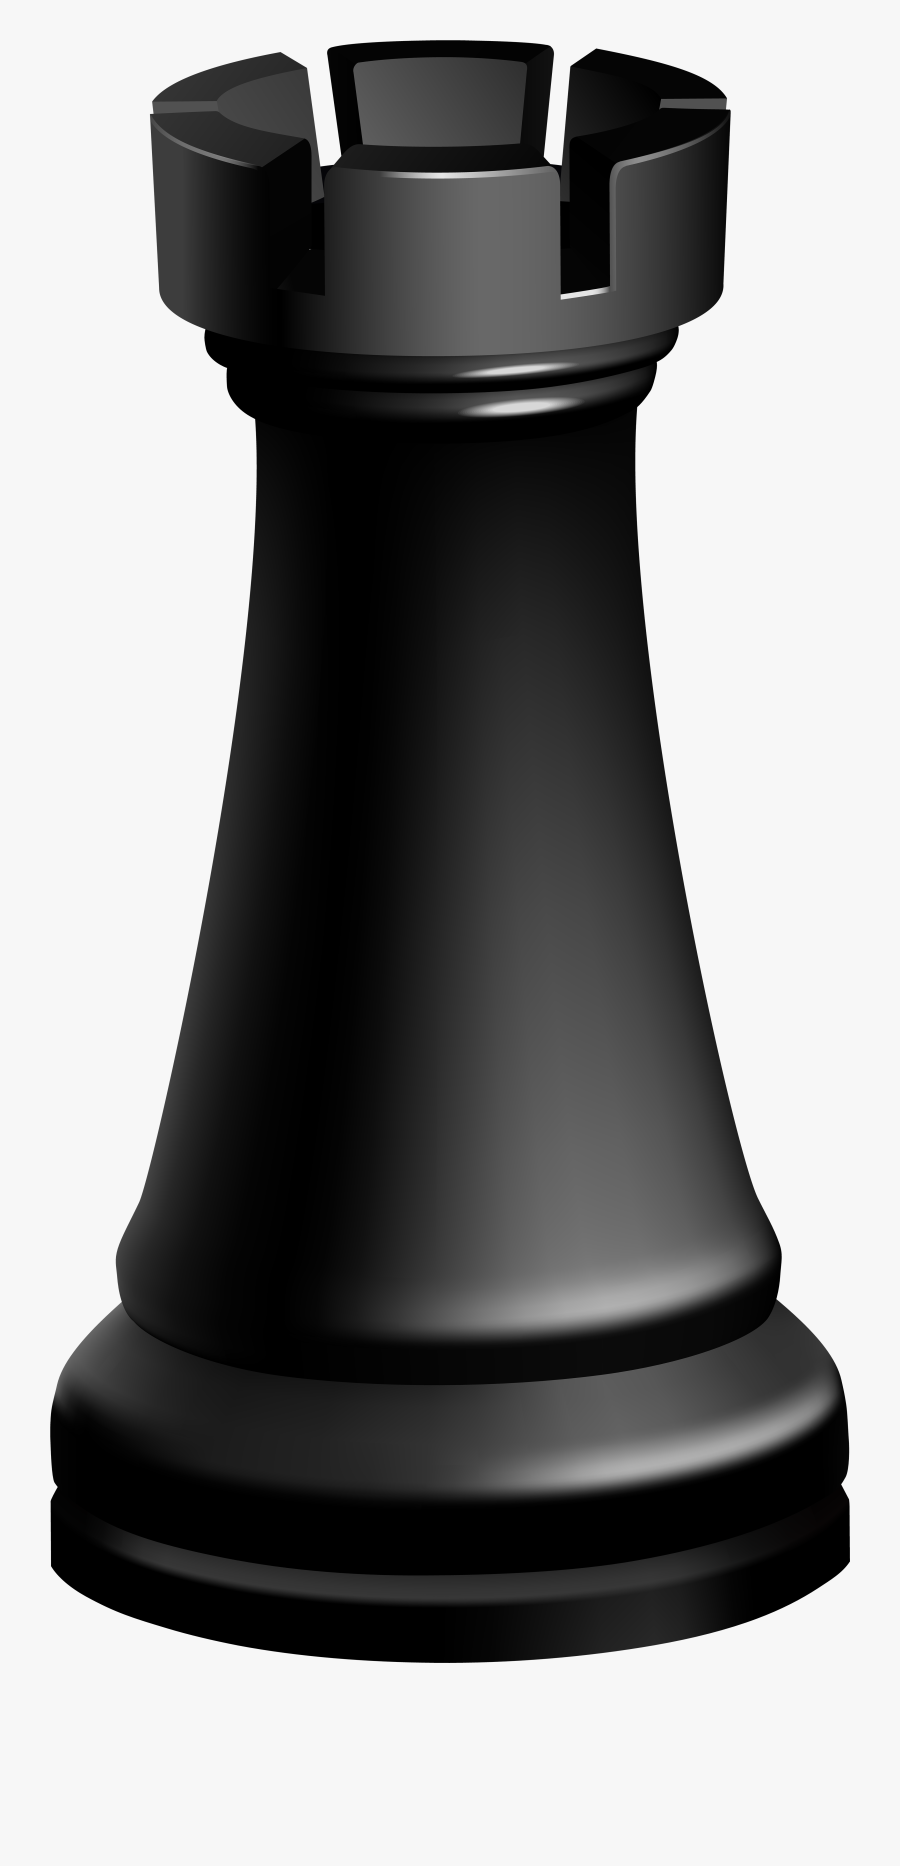 Rook Black Chess Piece Clip Art - Rook Chess Piece Png, Transparent Clipart